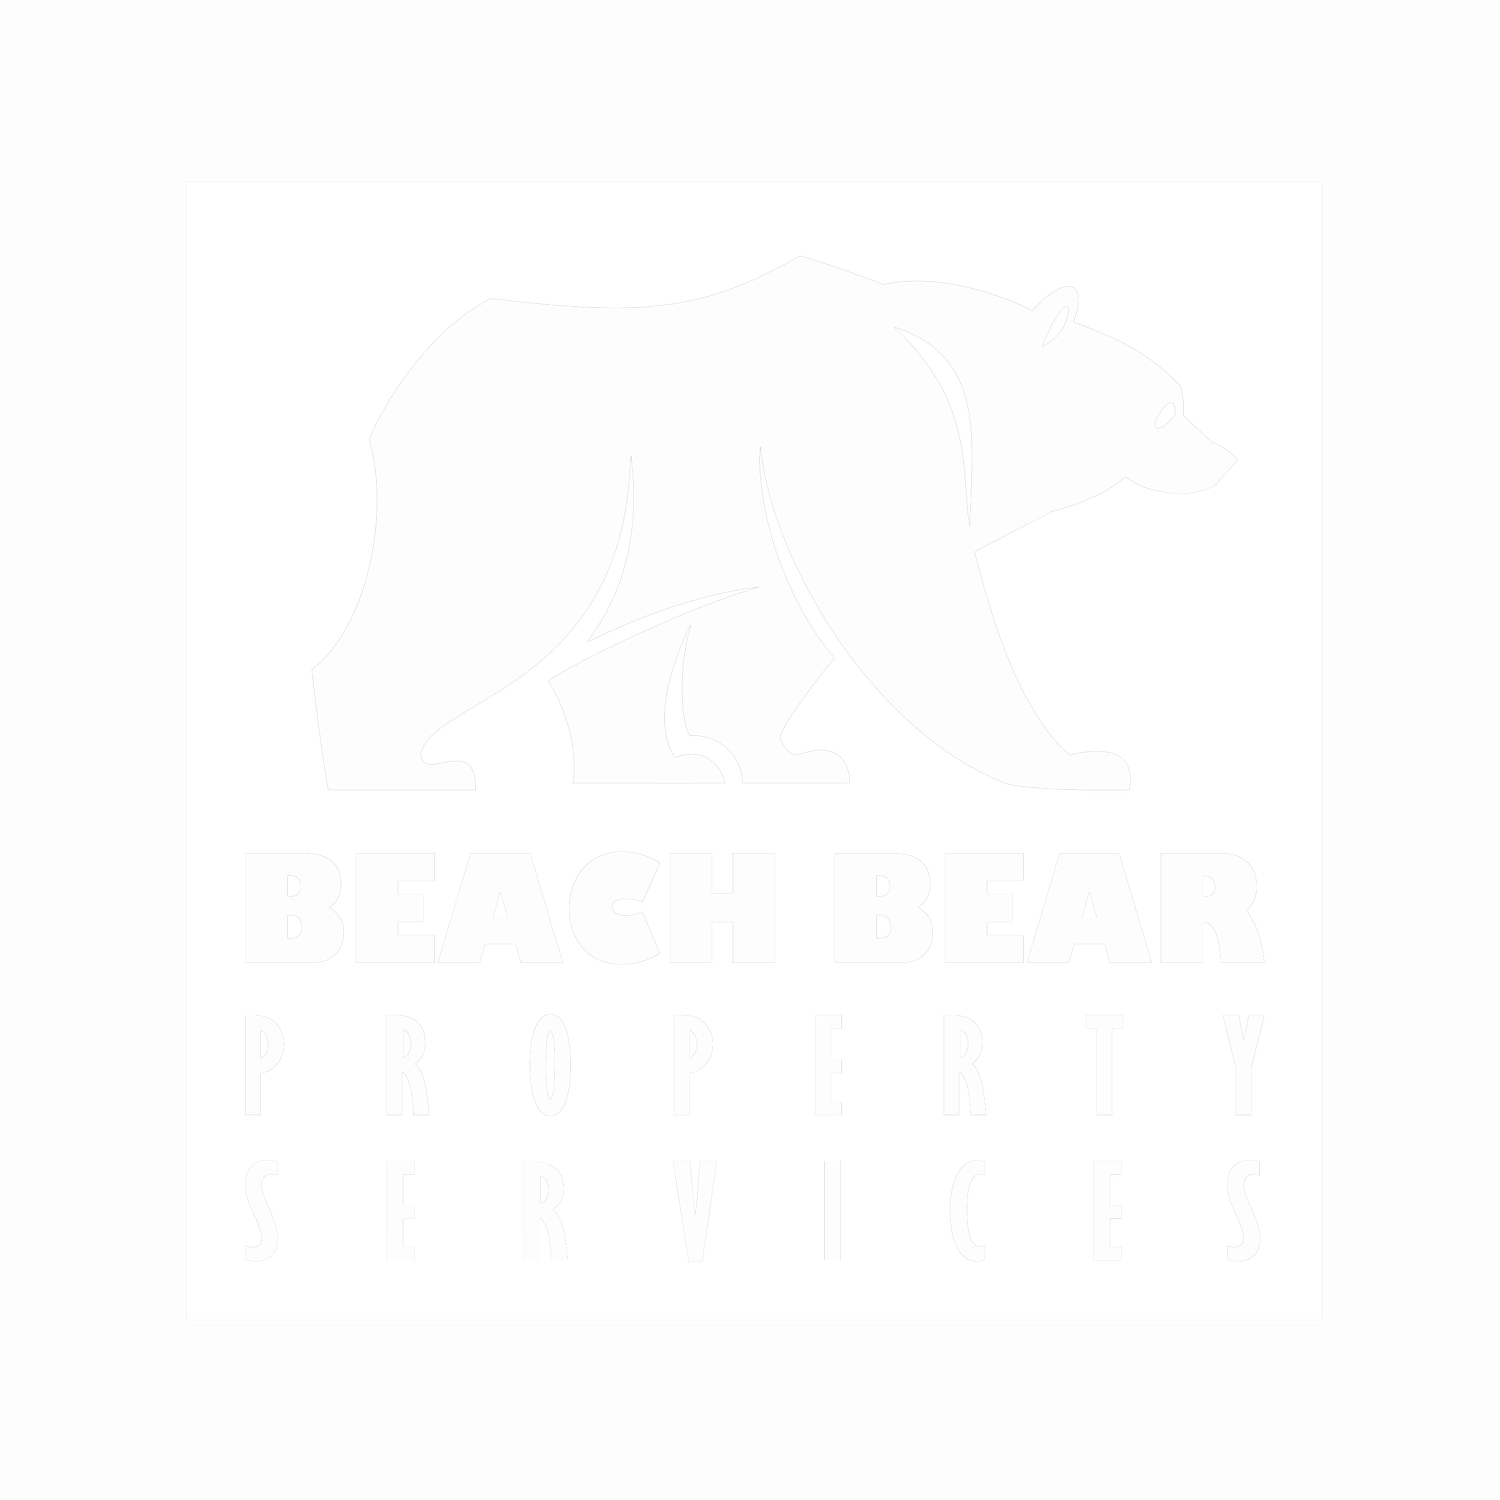 Beach Bear Property Services